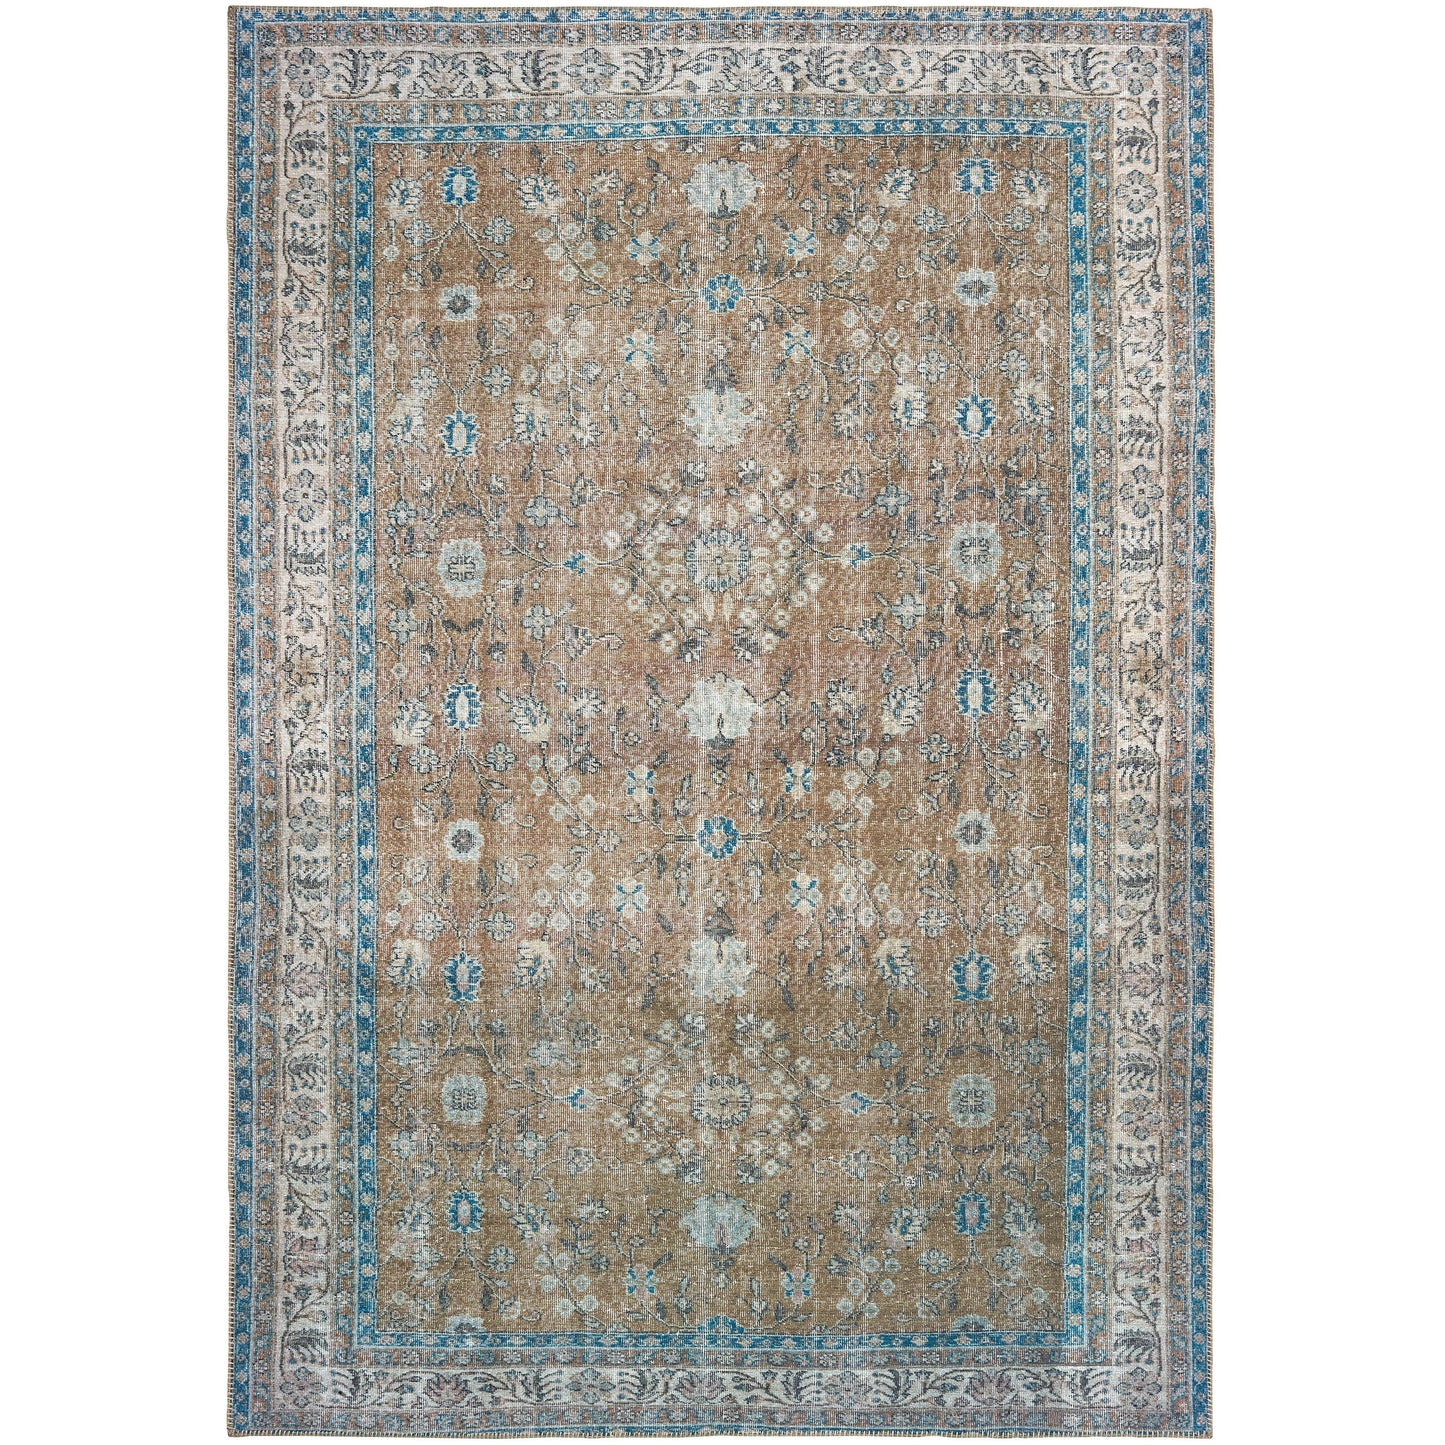 SOFIA 85818 Gold, Blue Rug - Oriental Weavers